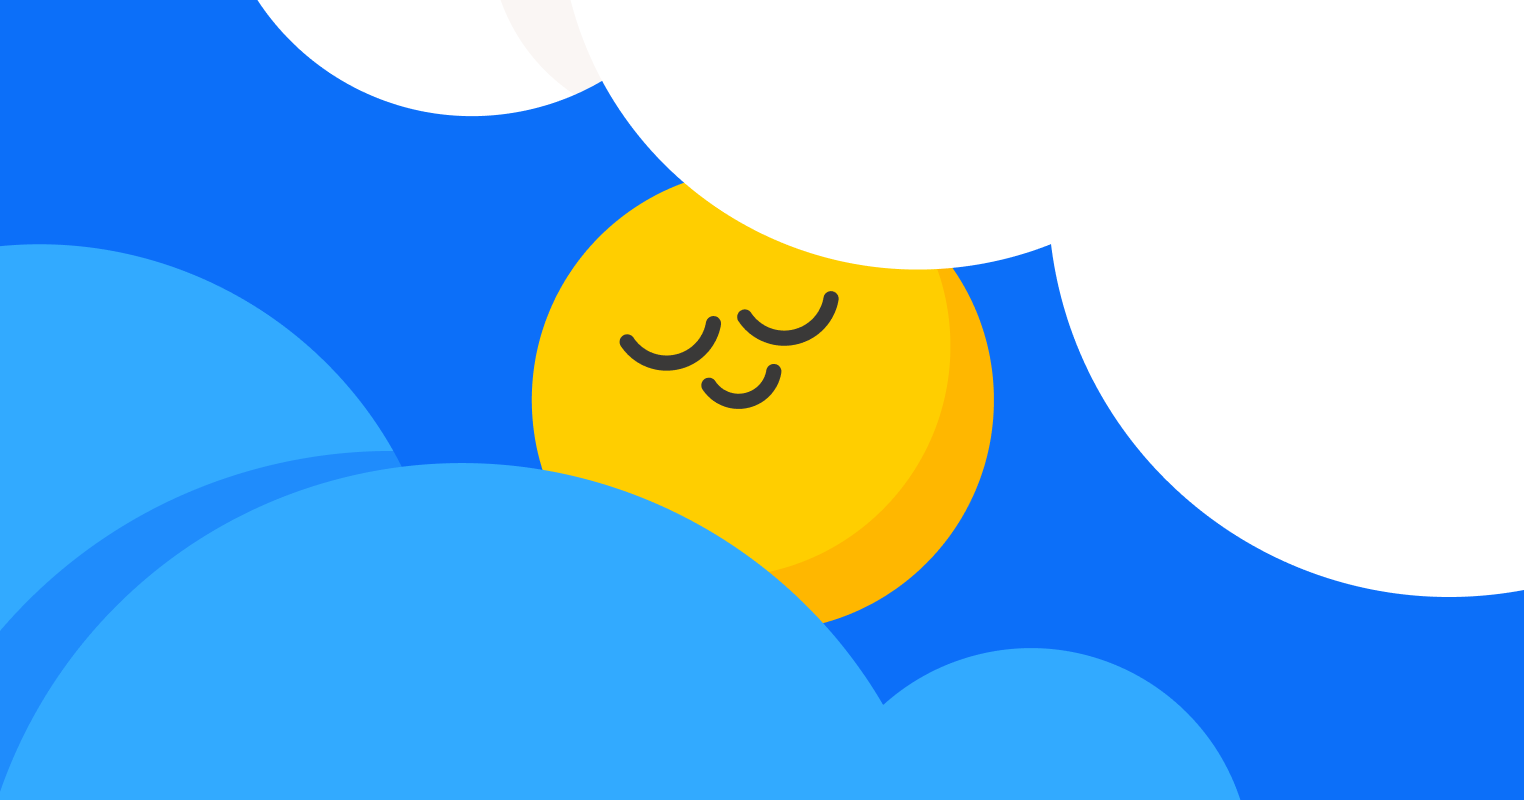 Simple Cute Cartoon Sleeping Moon GIF Animation PNG Images